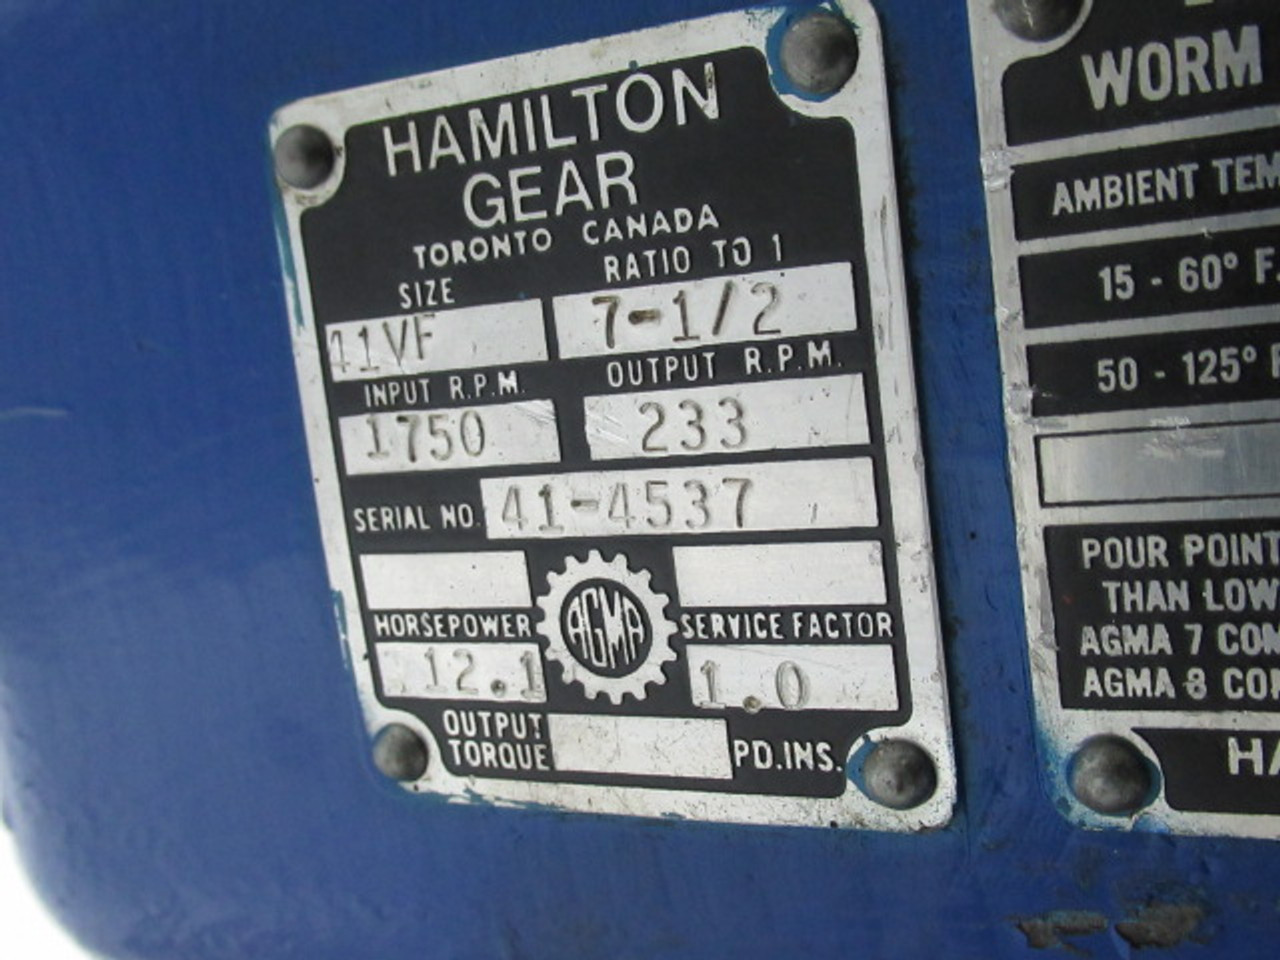 Hamilton Gear 41VF Worm Gear Reducer 7.5:1 Ratio 12.1HP 1750RPM USED